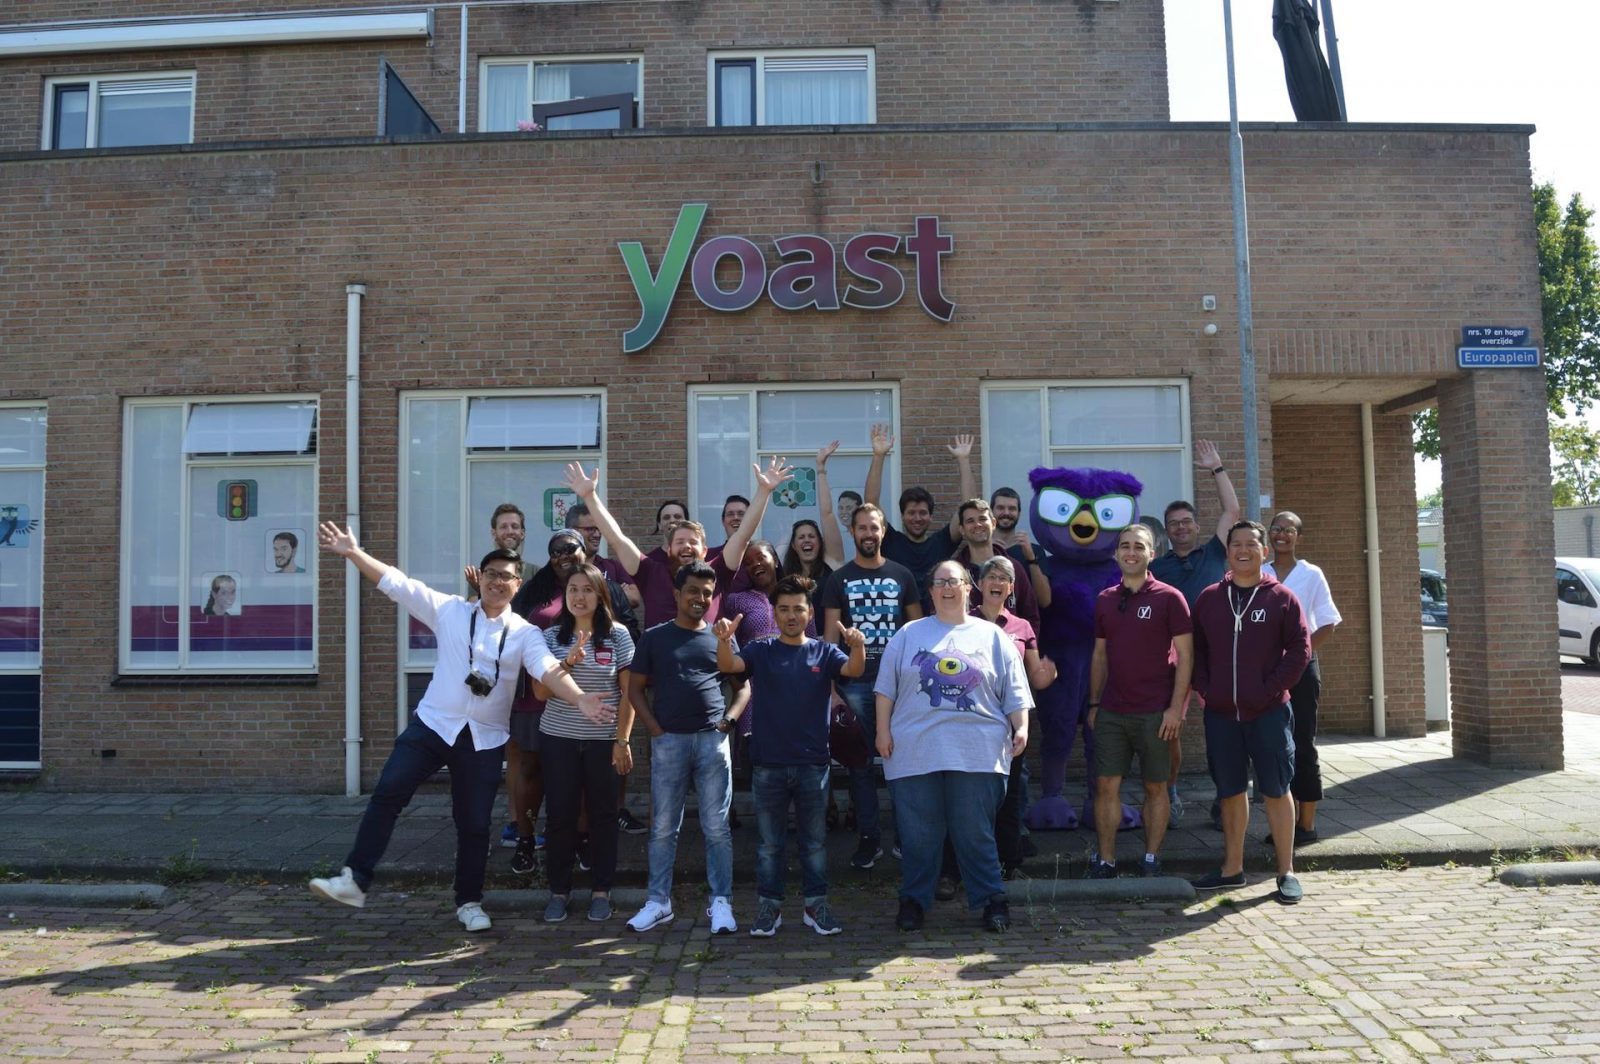 YoastCamp, where Yoast support engineers unite